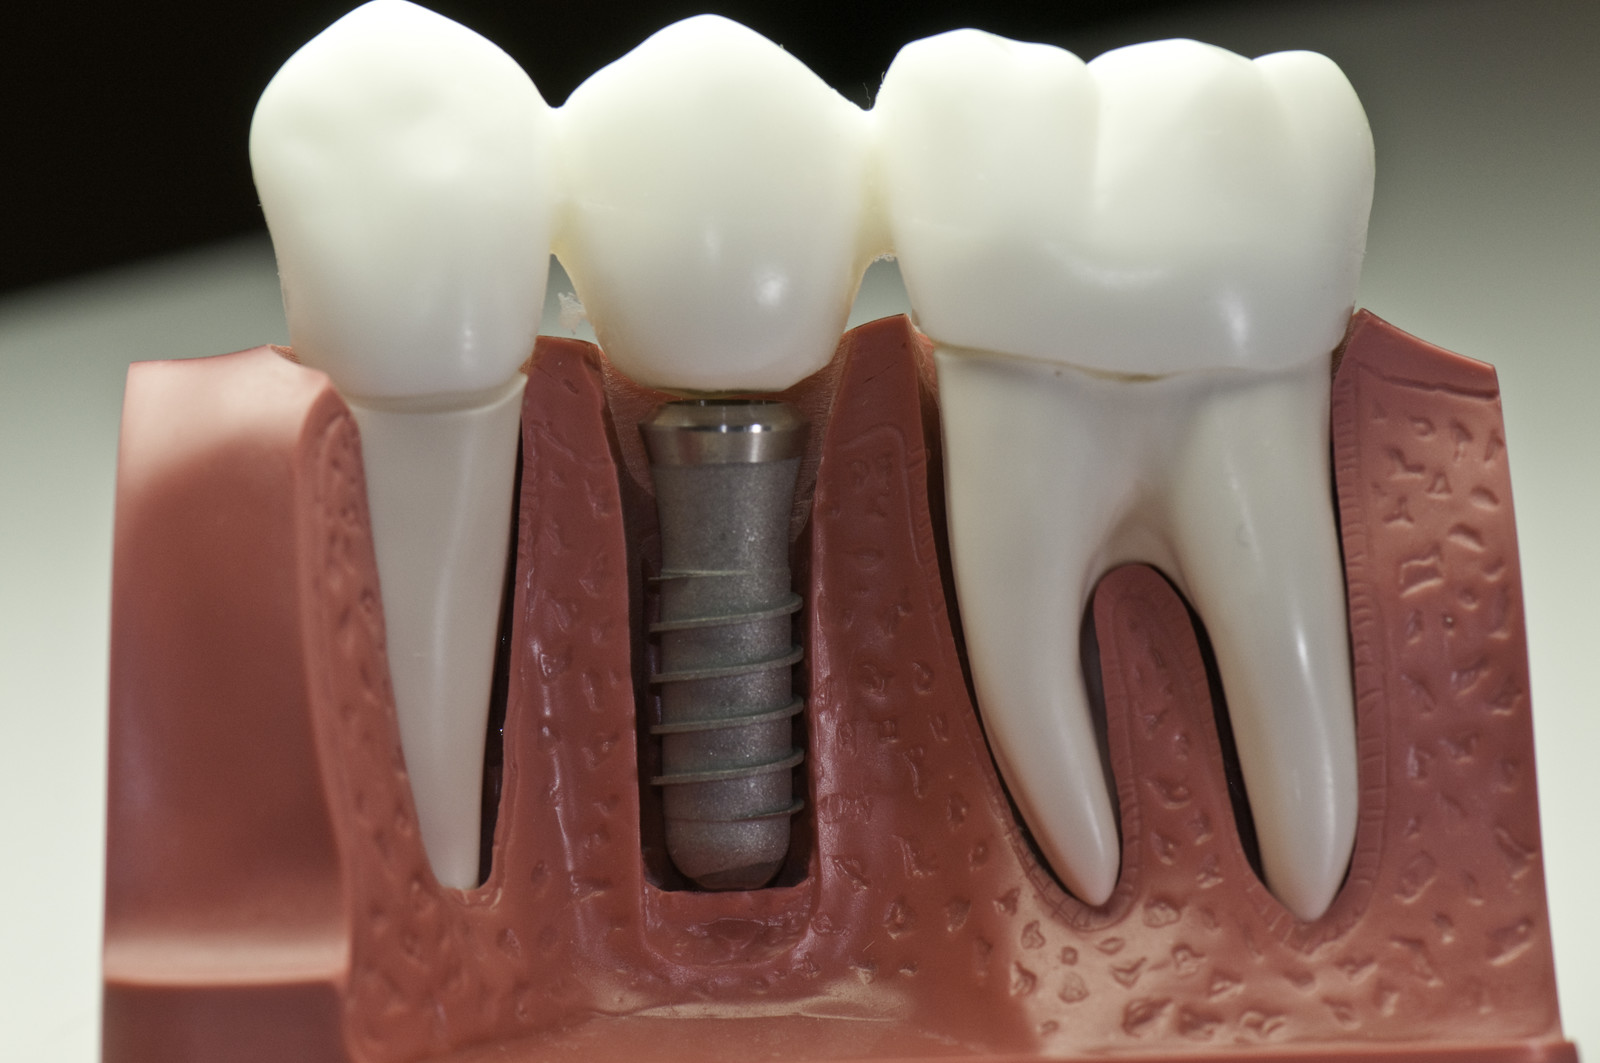 Actual Look of Dental Implants